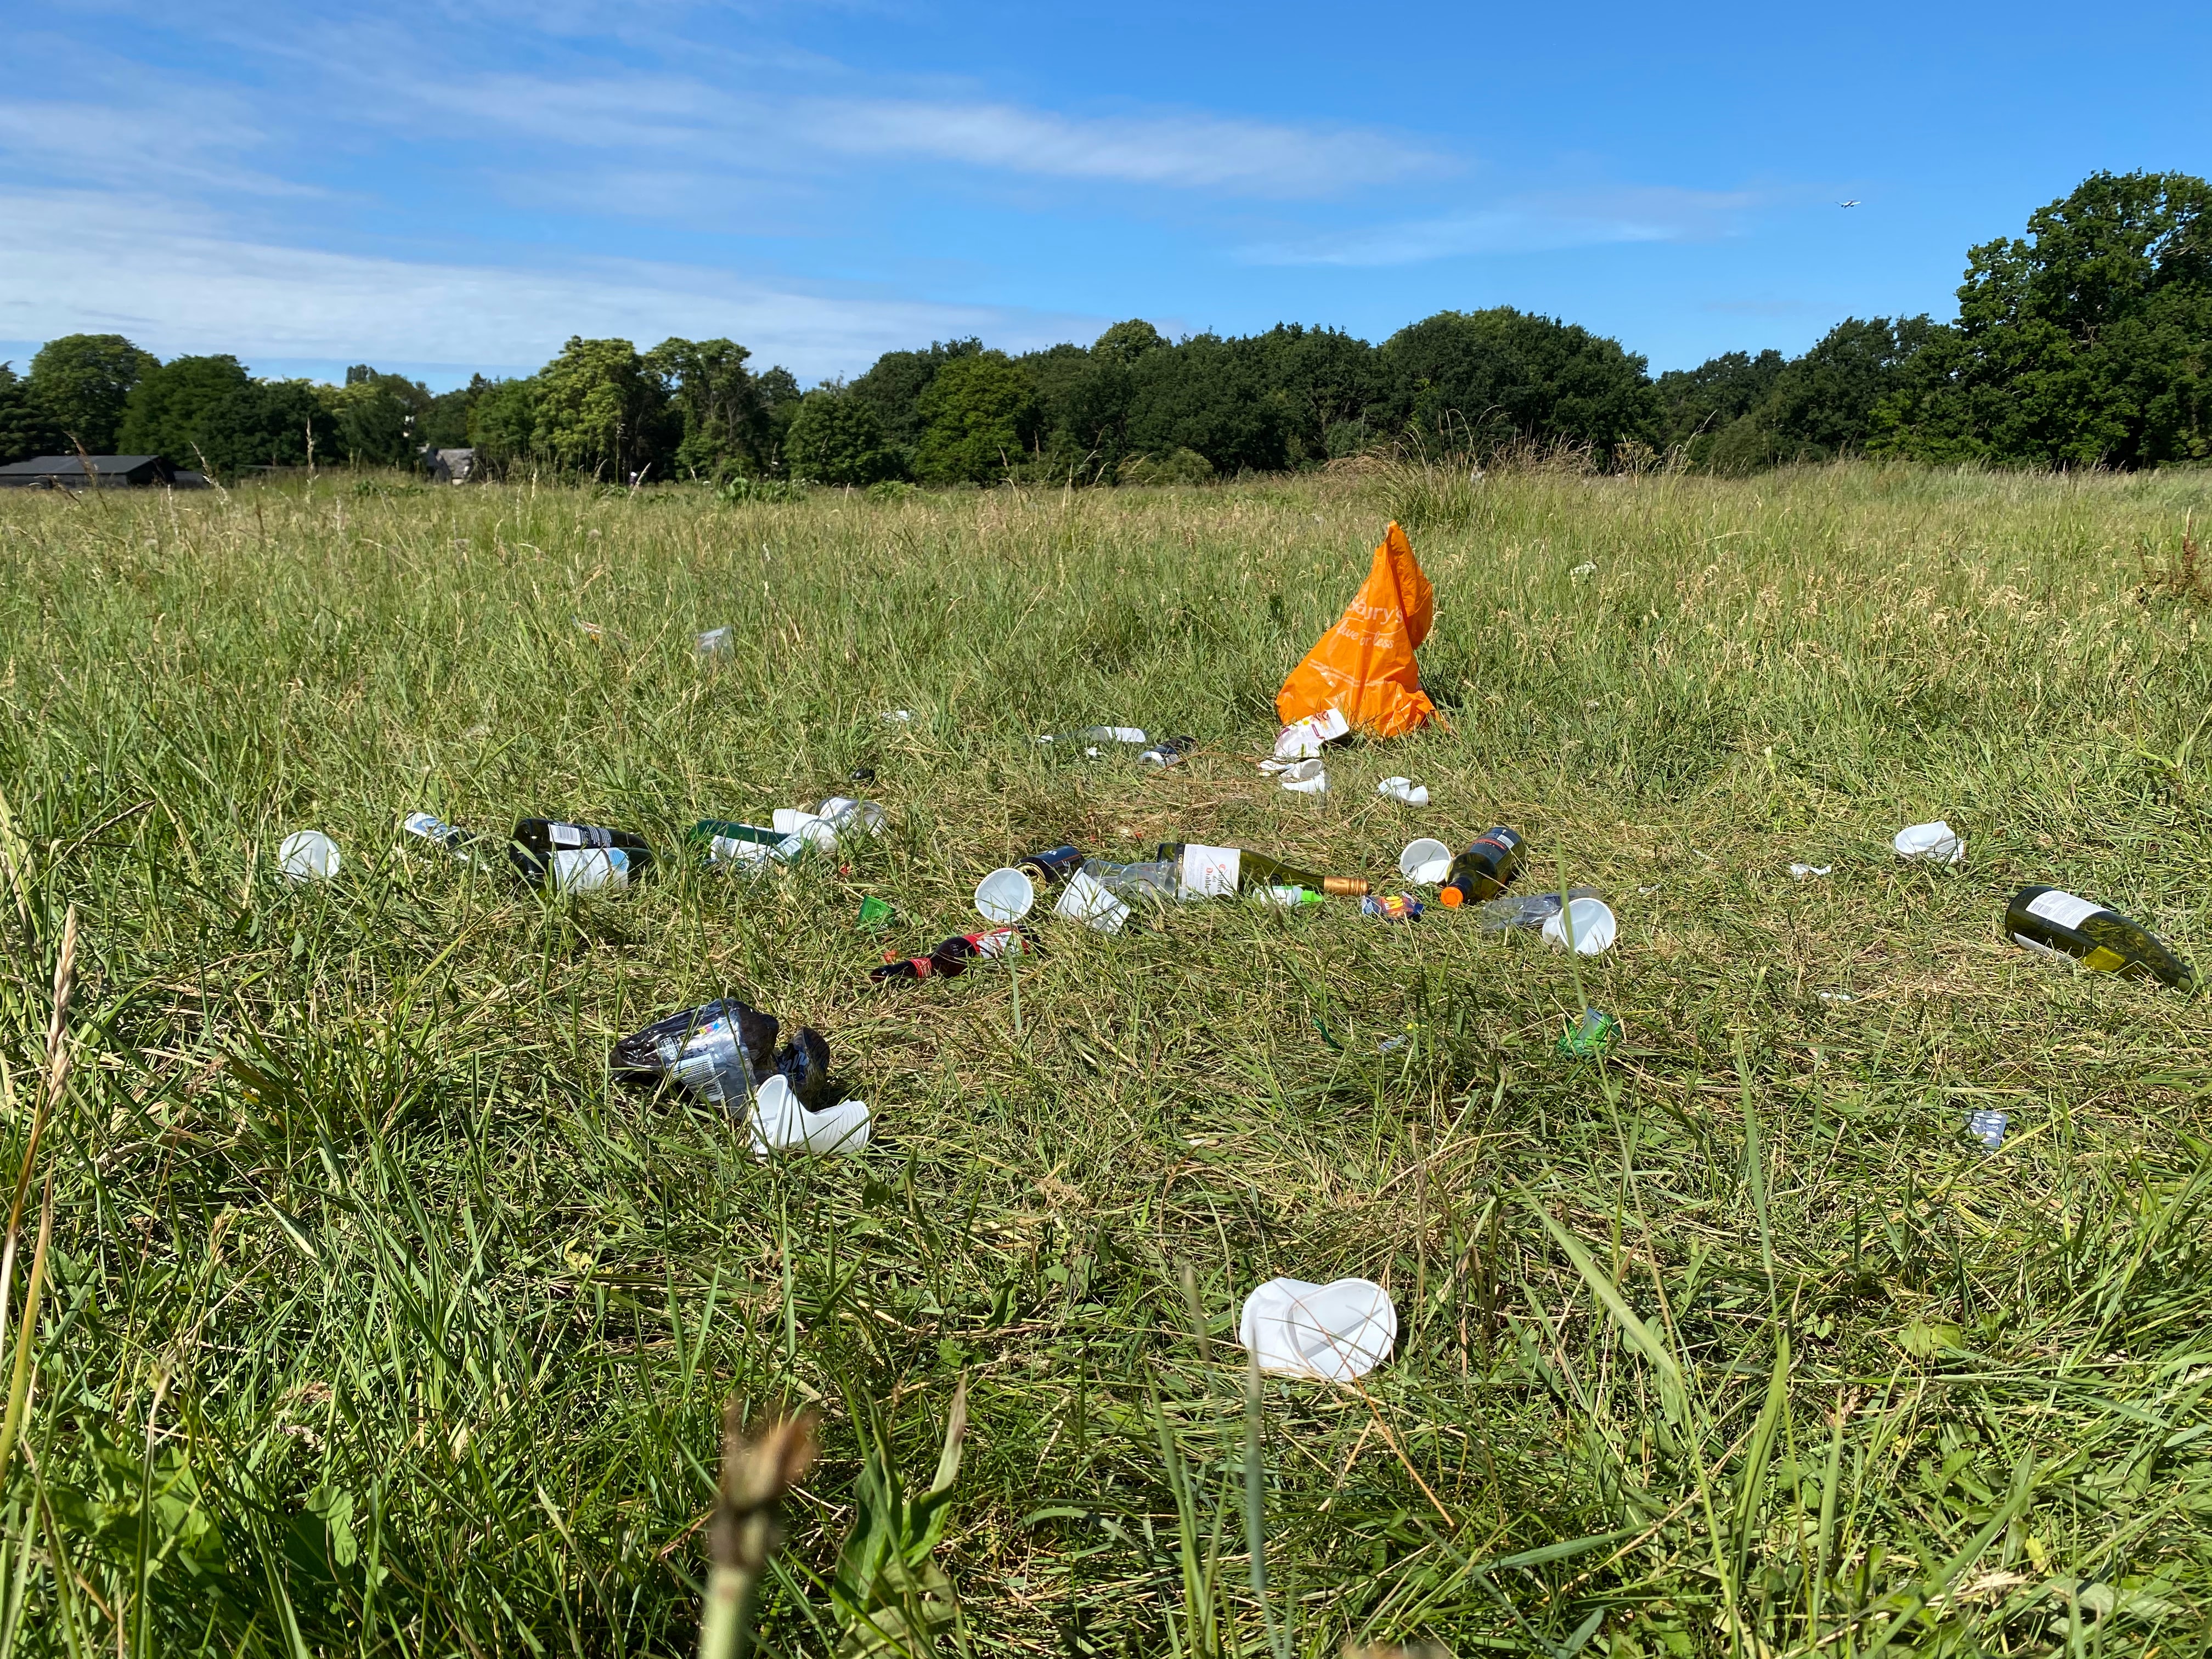 Photo of litter on a field by John Cameron on Unsplash